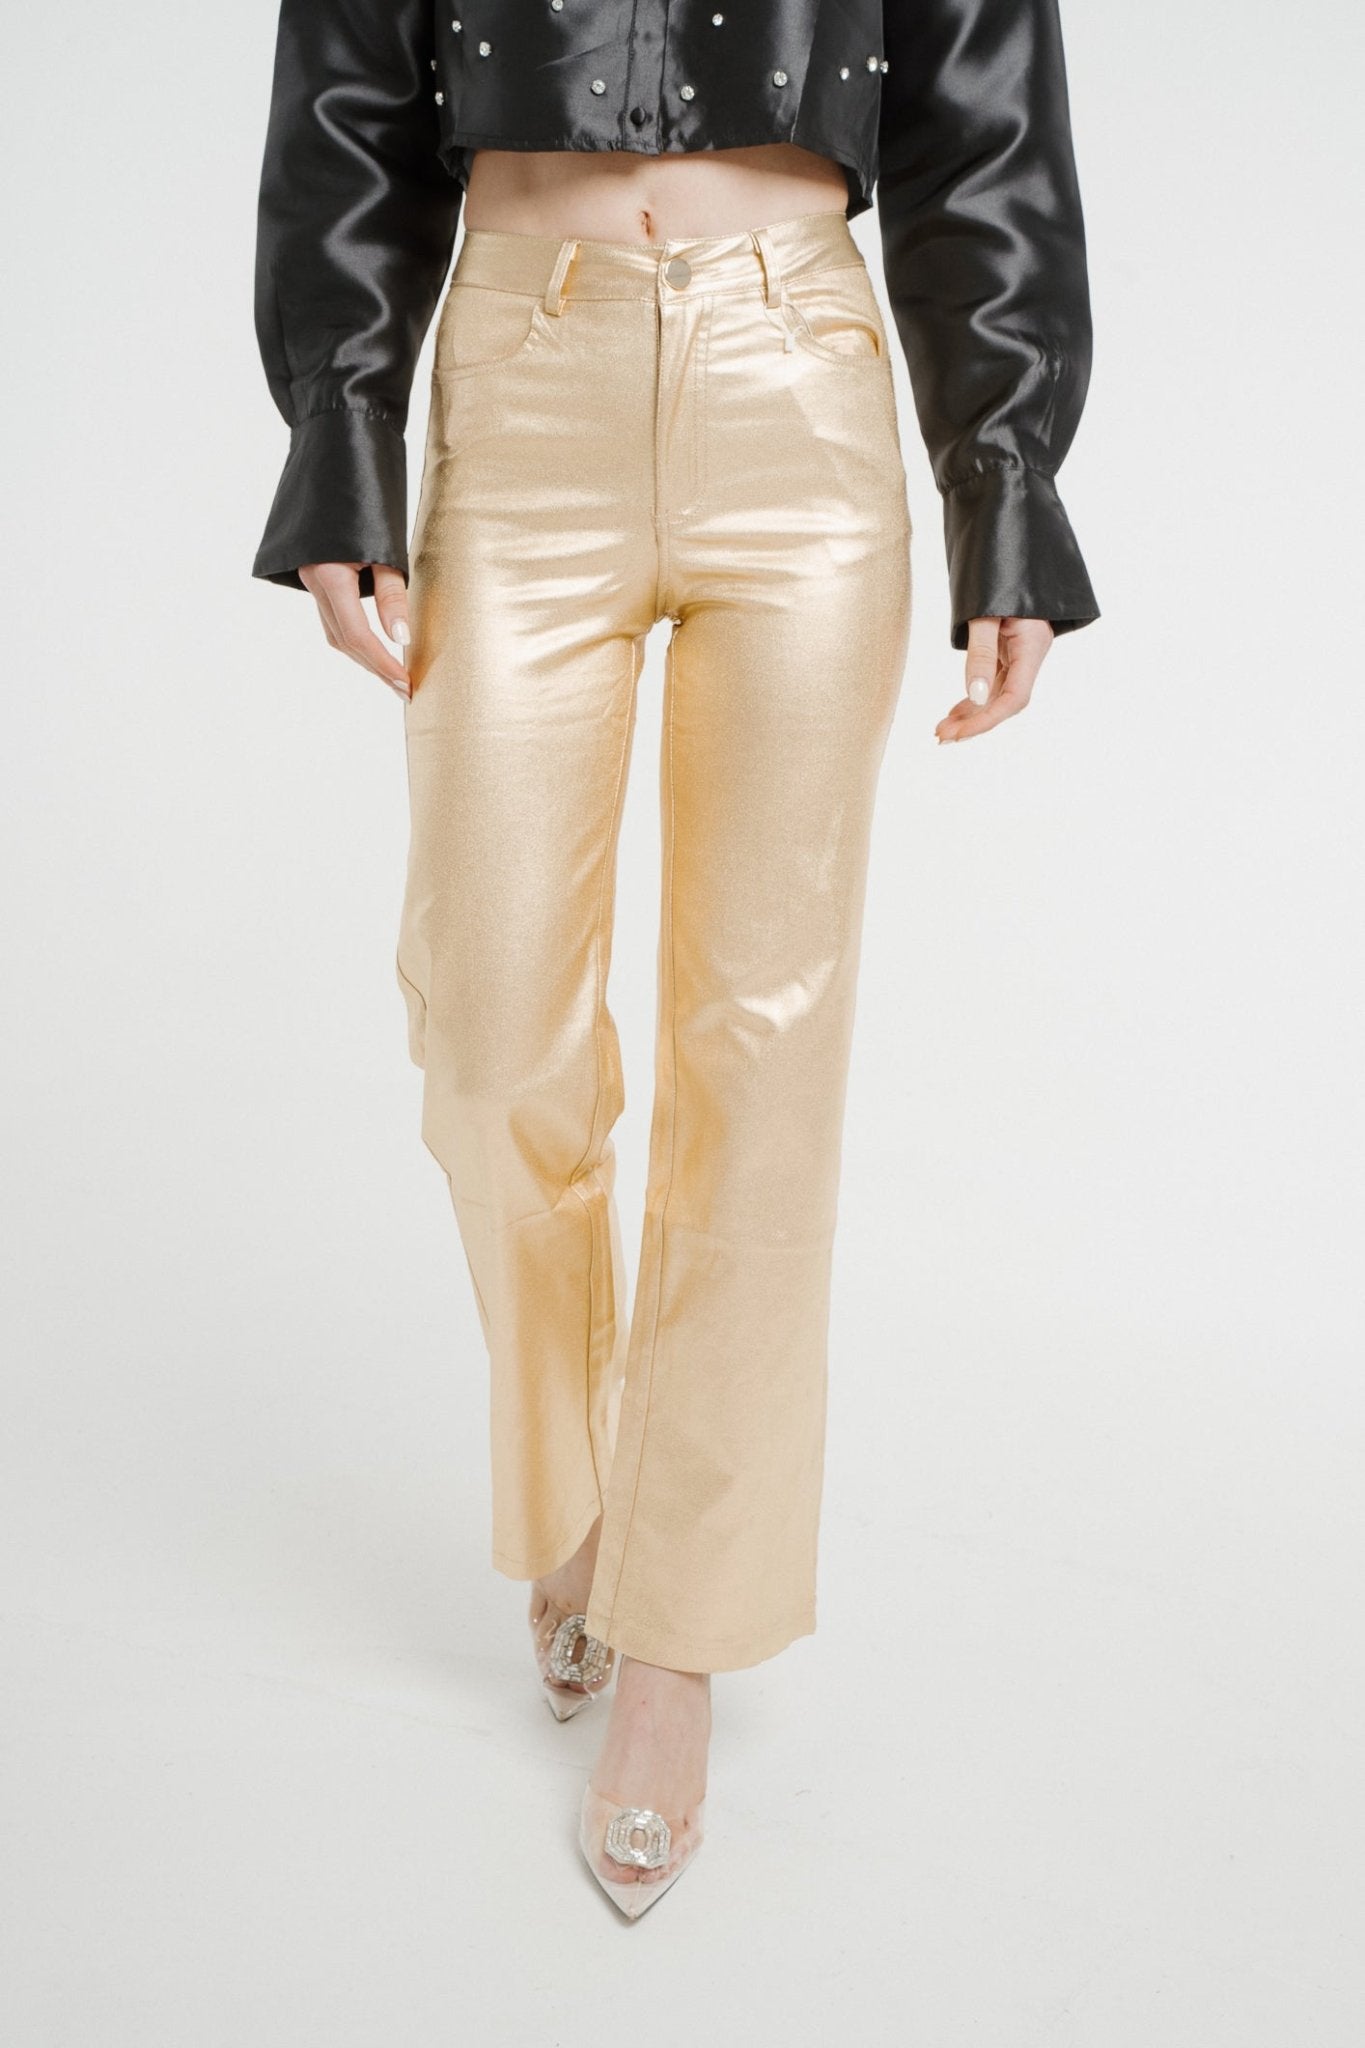 Polly Metallic Jeans In Gold - The Walk in Wardrobe